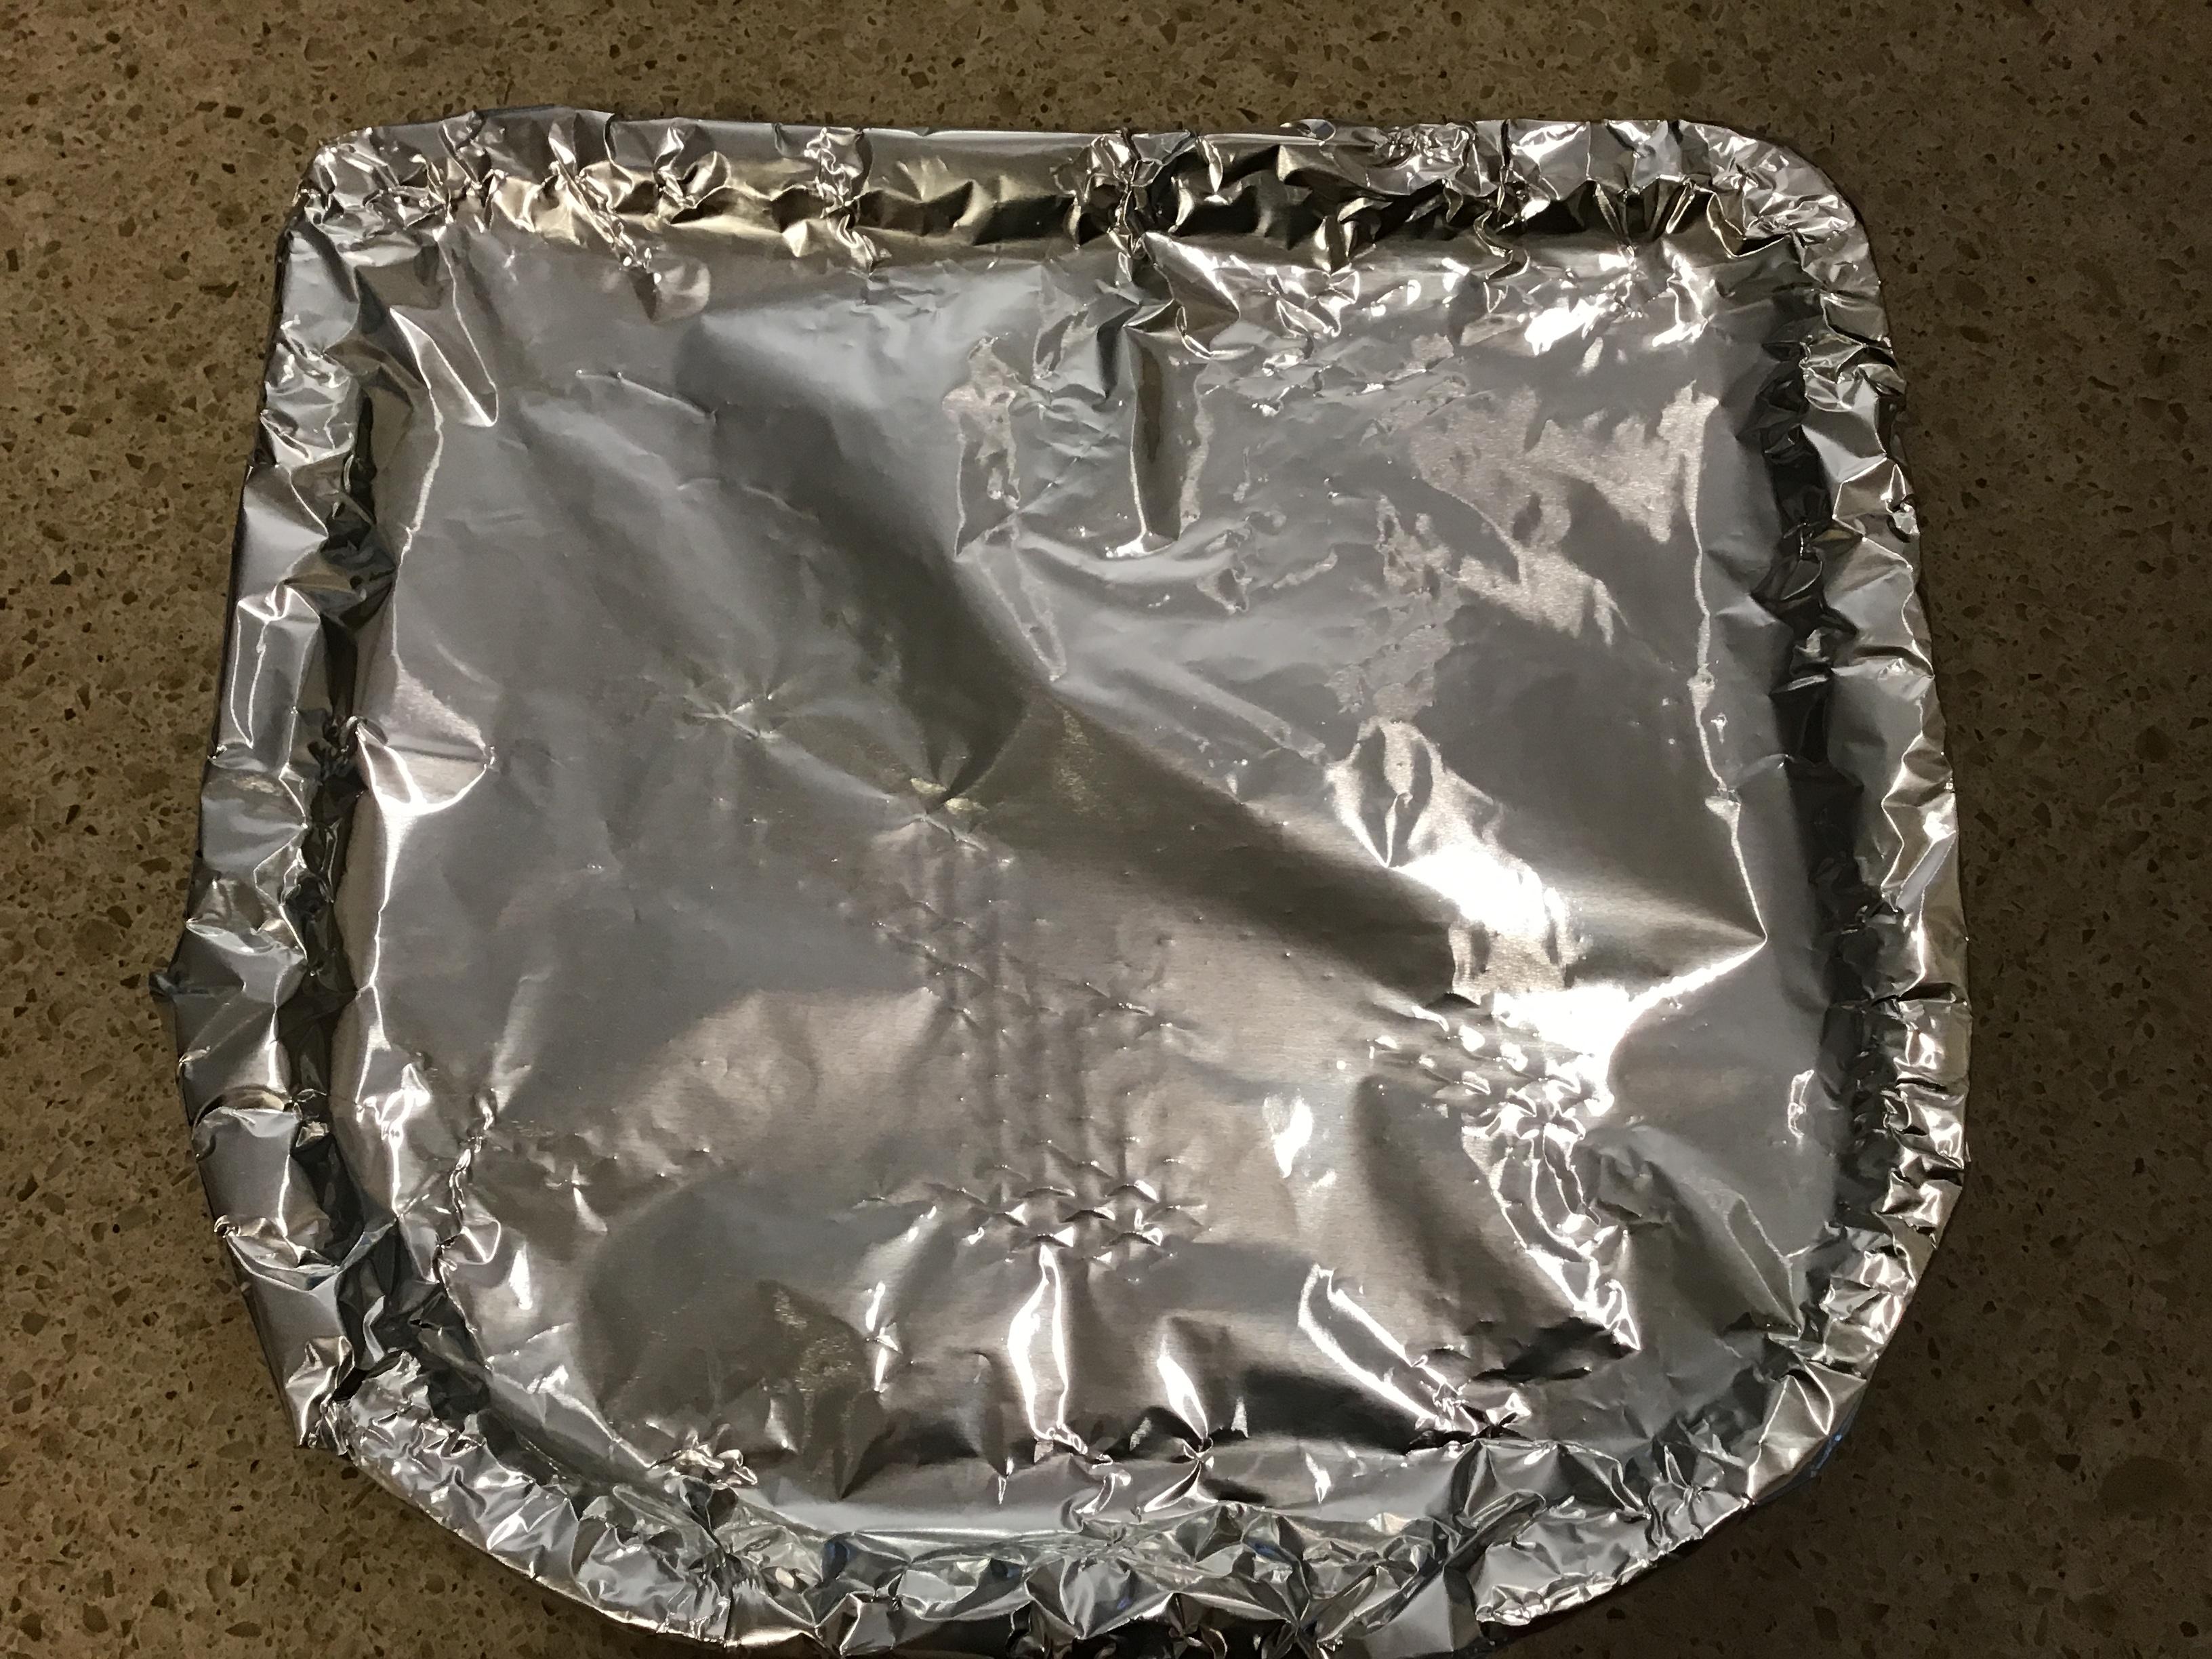 tin foil covered fry pan.JPG